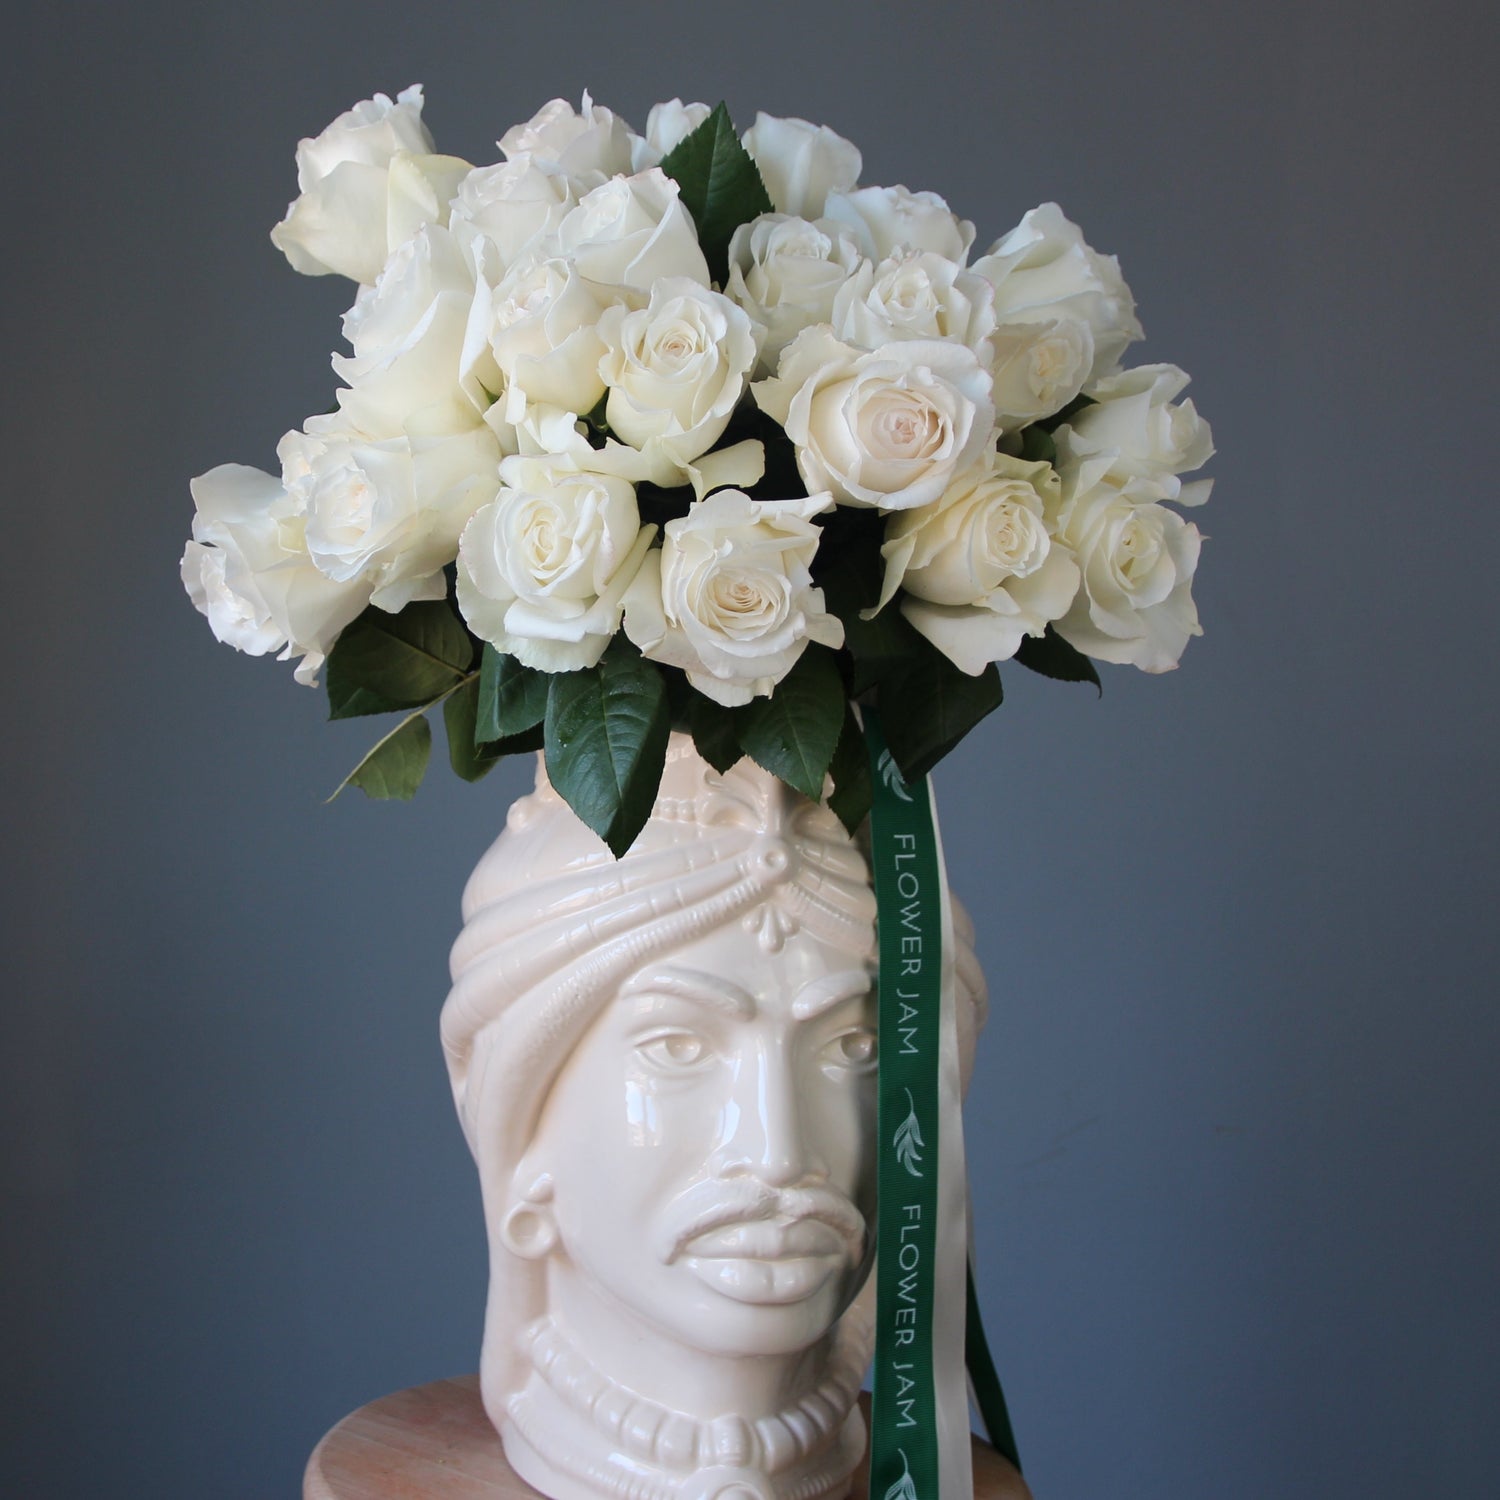 white roses flowers delivery Genoa liguria portofino